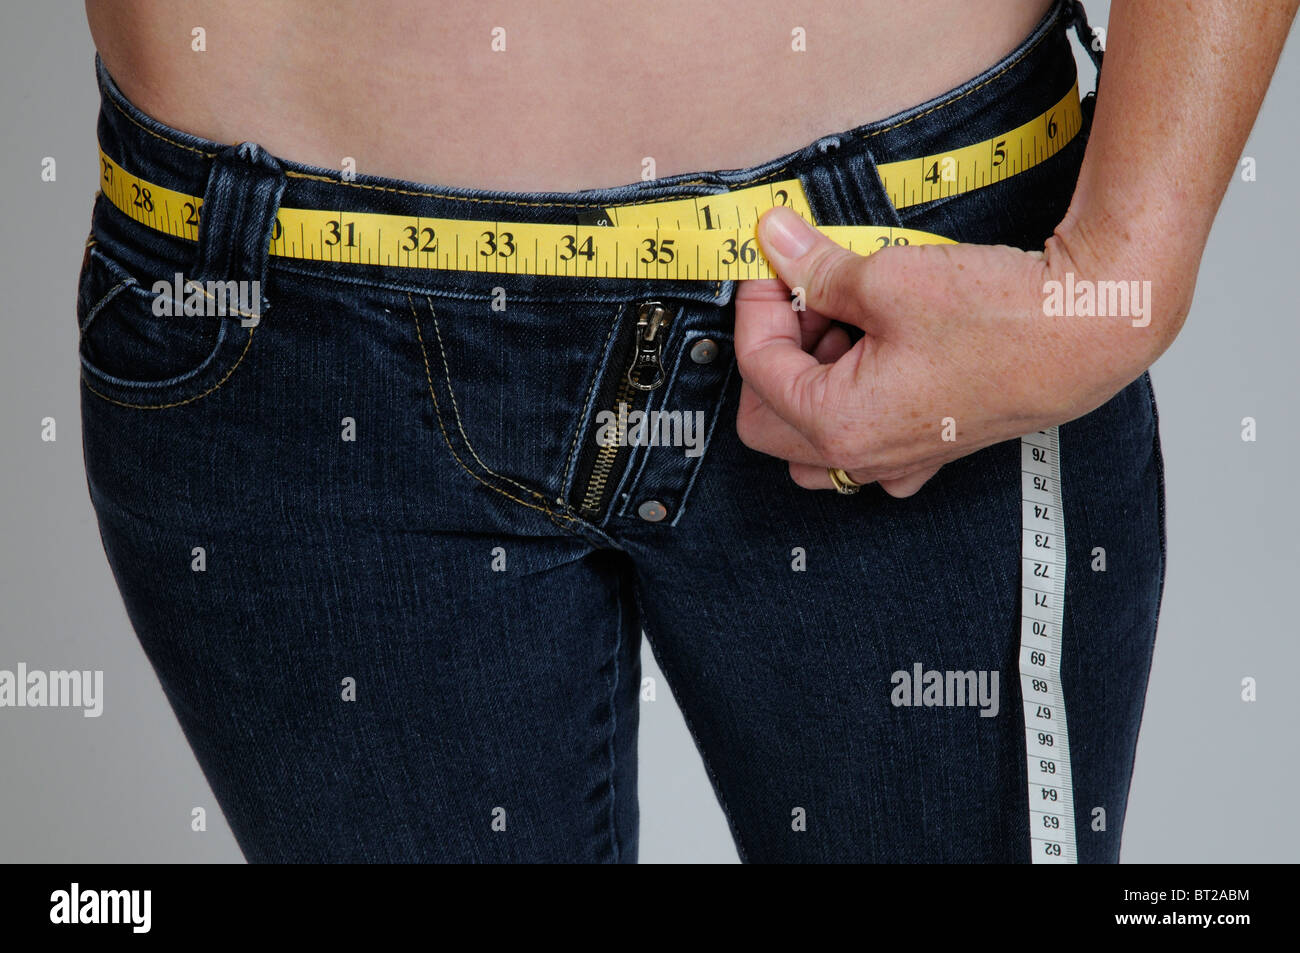 Tape measure around someone's waist – License Images – 936264